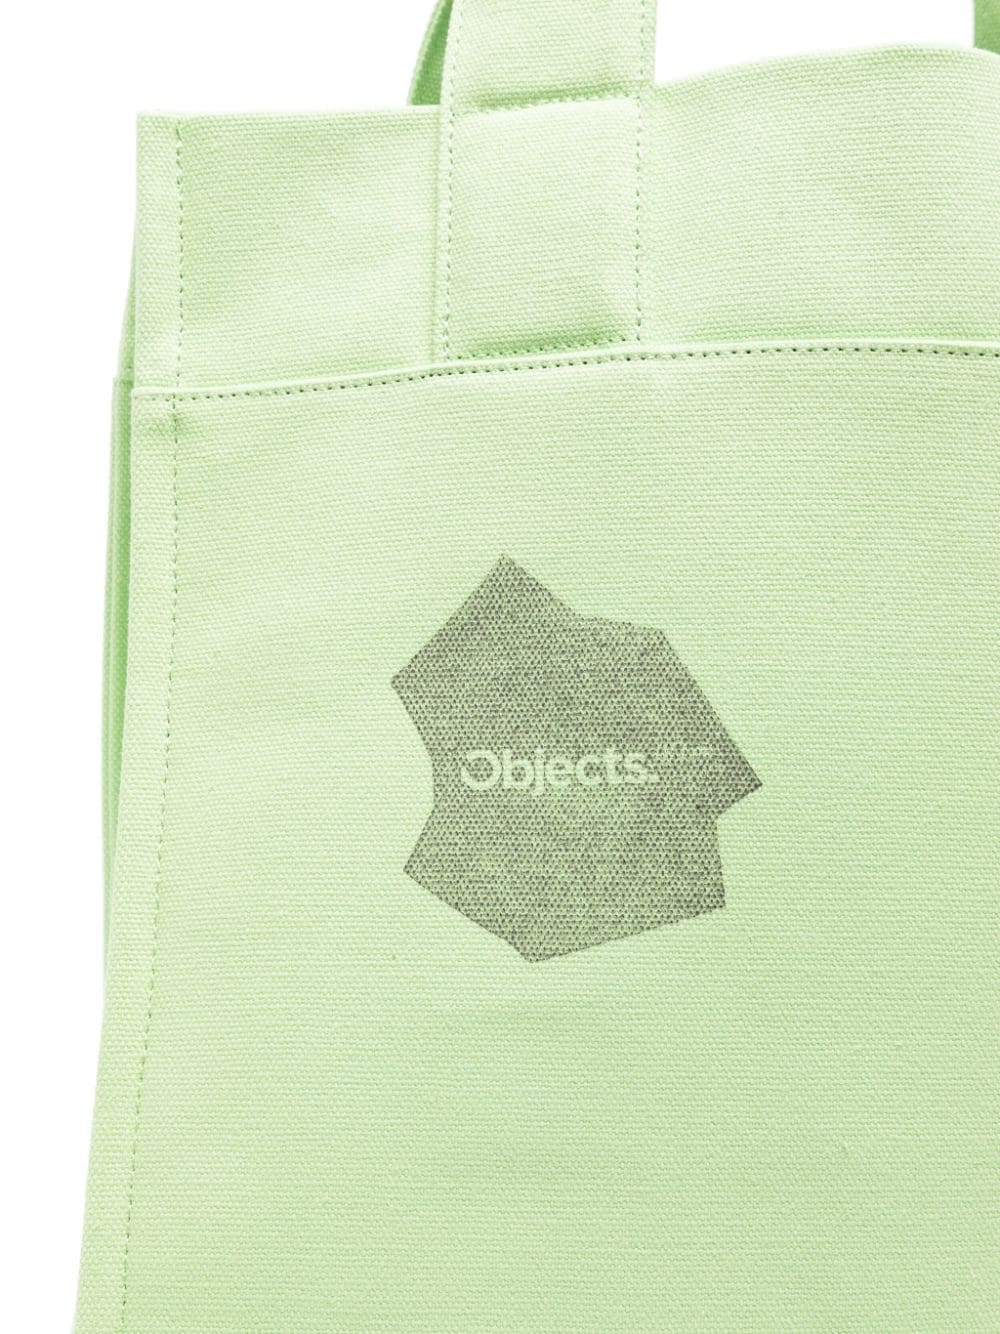 Shop Objects Iv Life Logo-print Cotton Tote Bag